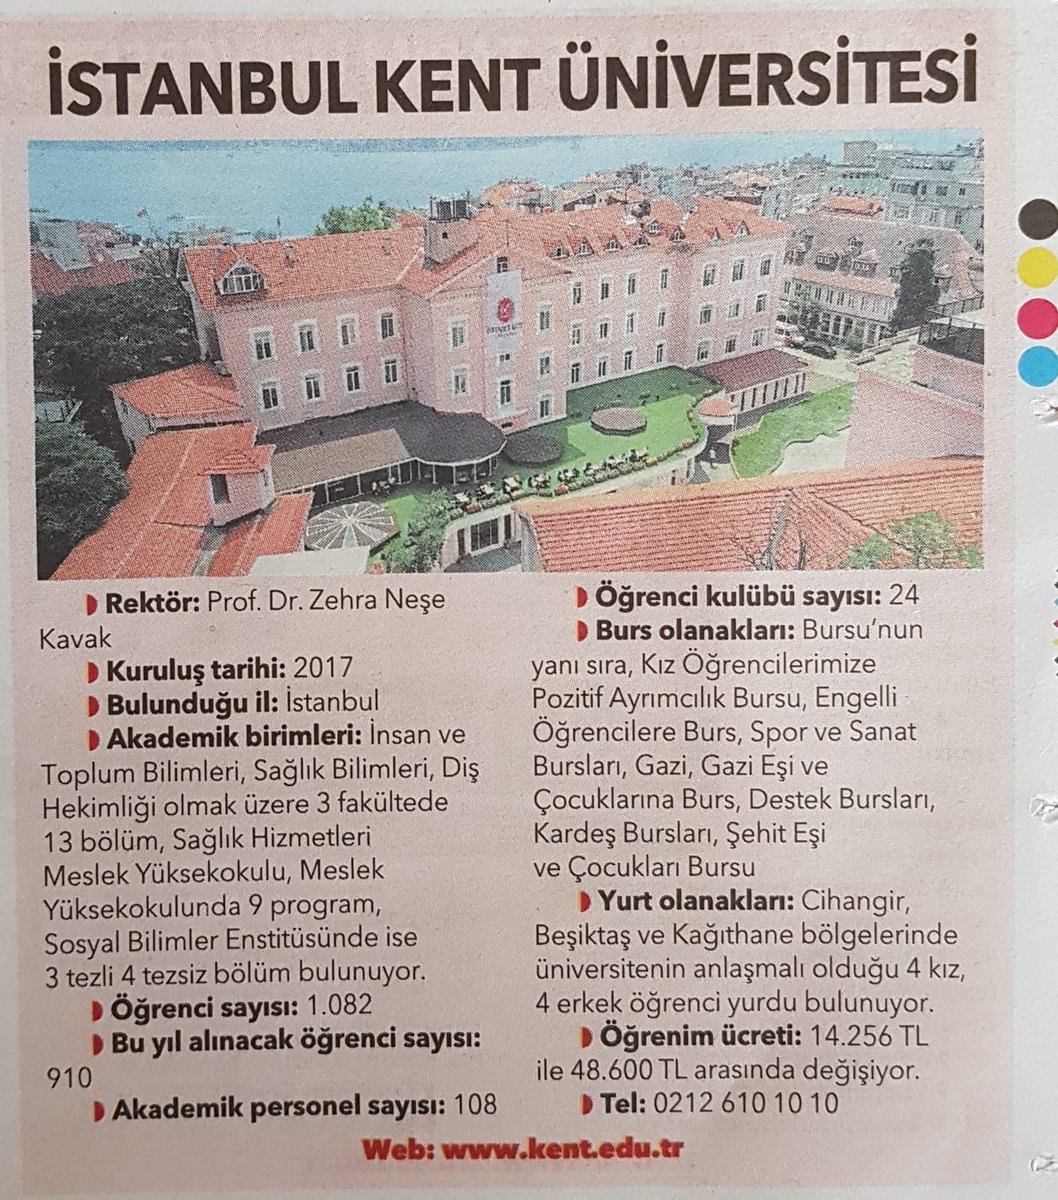 istanbul kent universitesi on twitter istanbul kent universitesi posta gazetesi 2018 tercih rehberinde yer aldi istanbulkentuniversitesi postagazetesi beyoglu cihangir taksim yks2018 tercih tercihdanismanligi nesekavak zehranesekavak